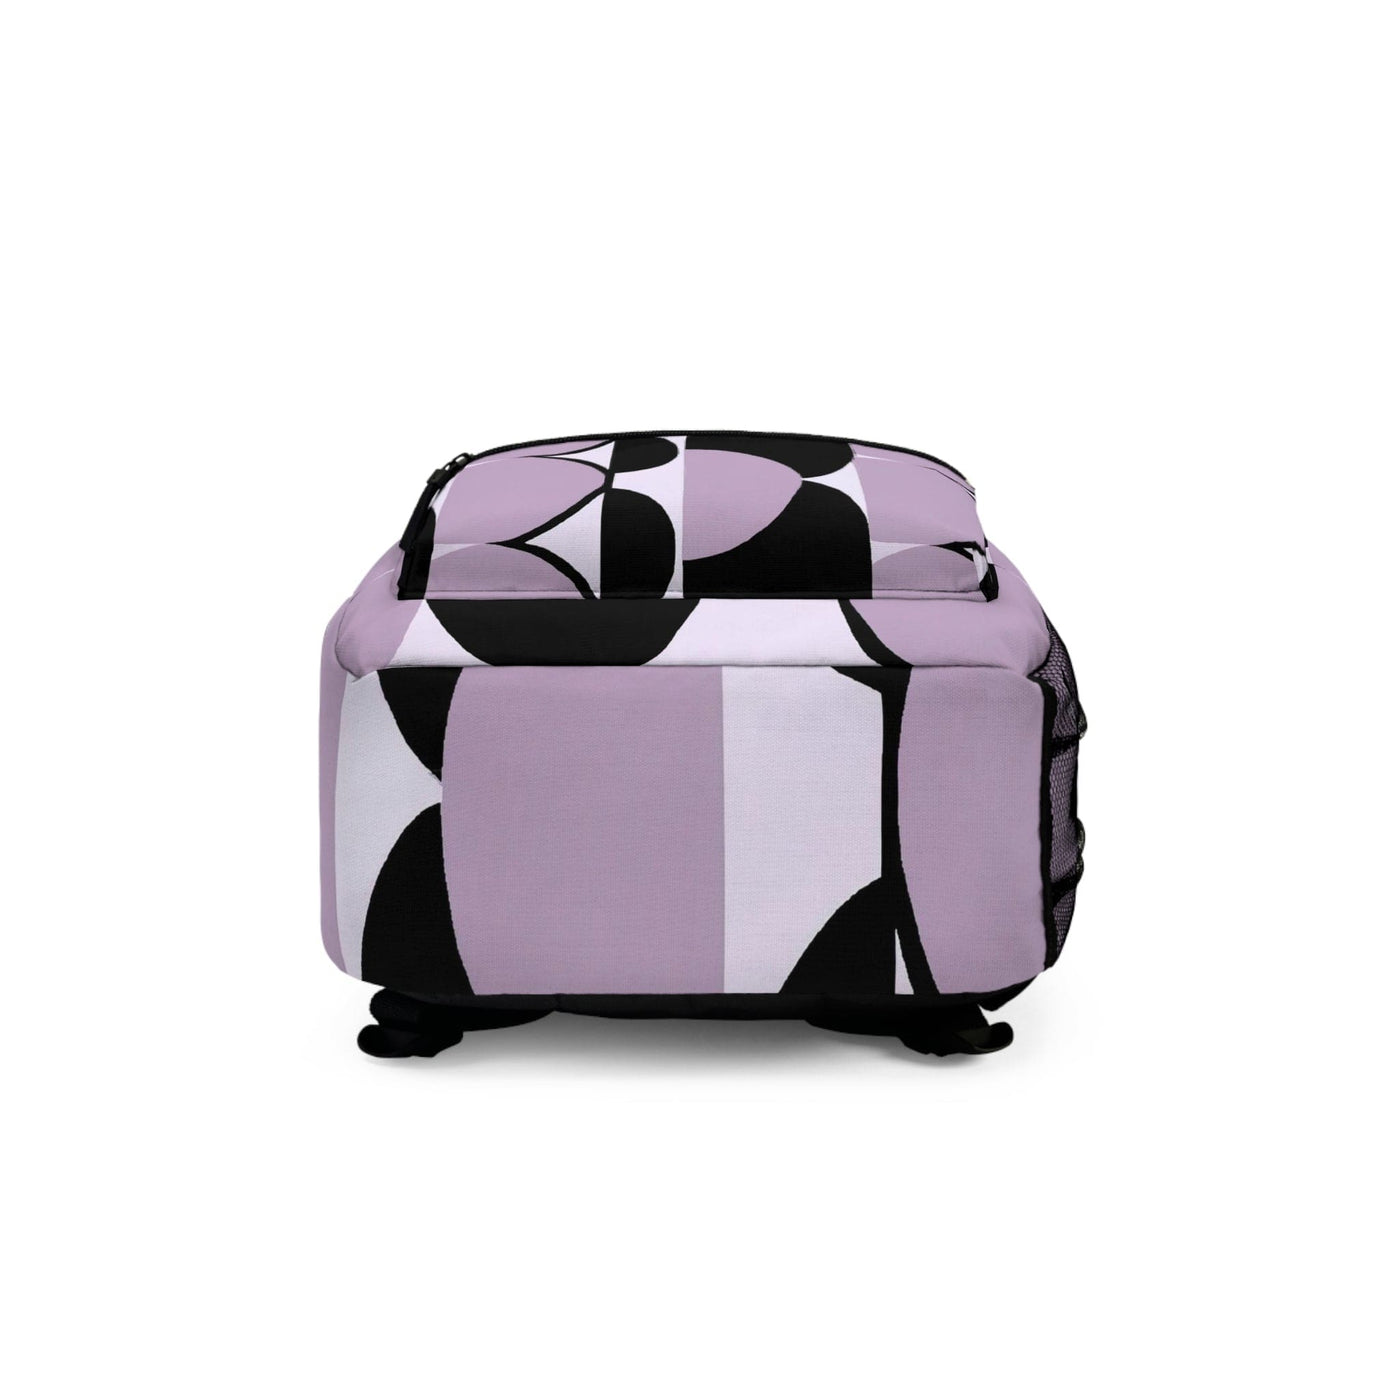 Backpack - Large Water-resistant Bag Geometric Lavender And Black Pattern - Bags